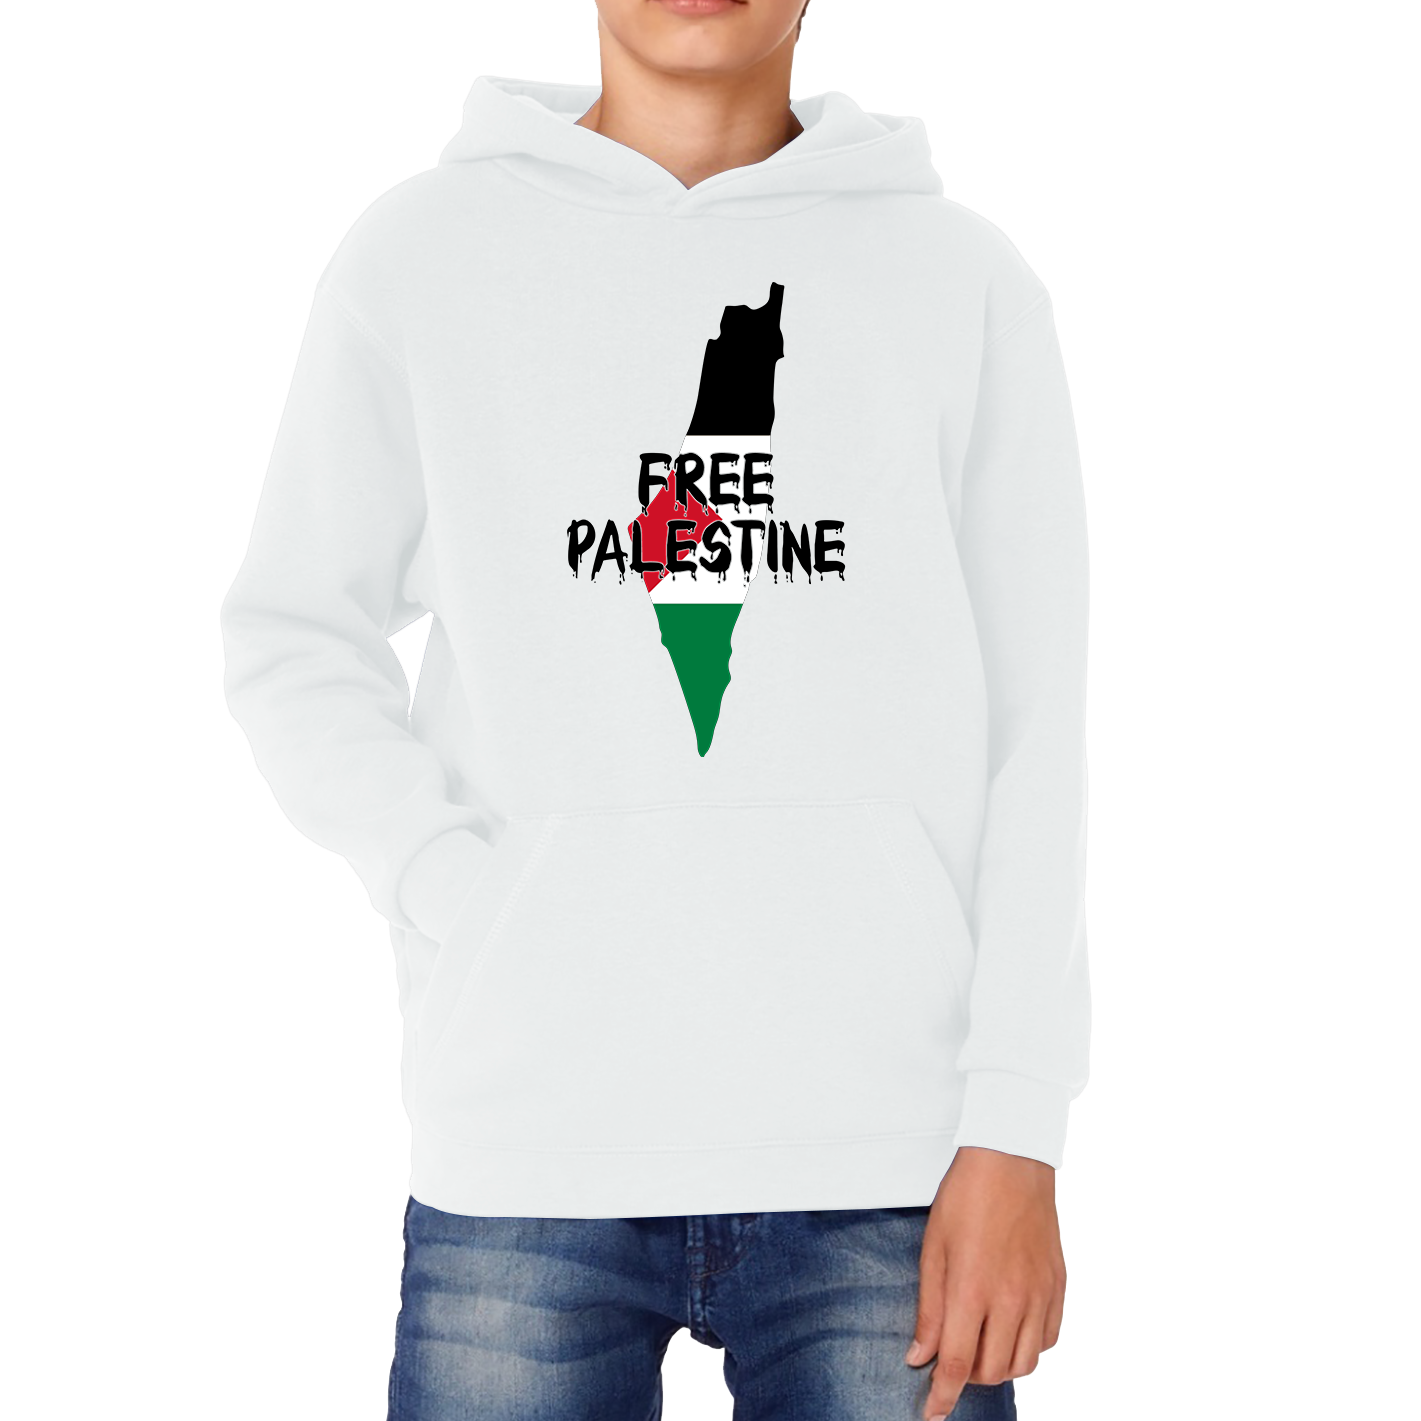 Free Palestine Stand With Palestine Muslim Lives Matter End Israeli Occupation Freedom Kids Hoodie